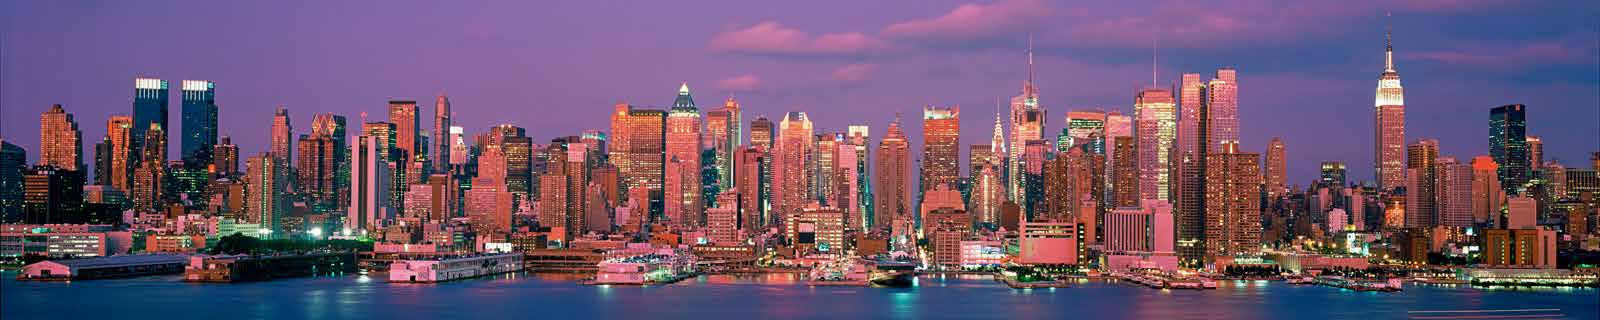 5RB1017 - RICHARD BERENHOLTZ - Manhattan Skyline, NYC